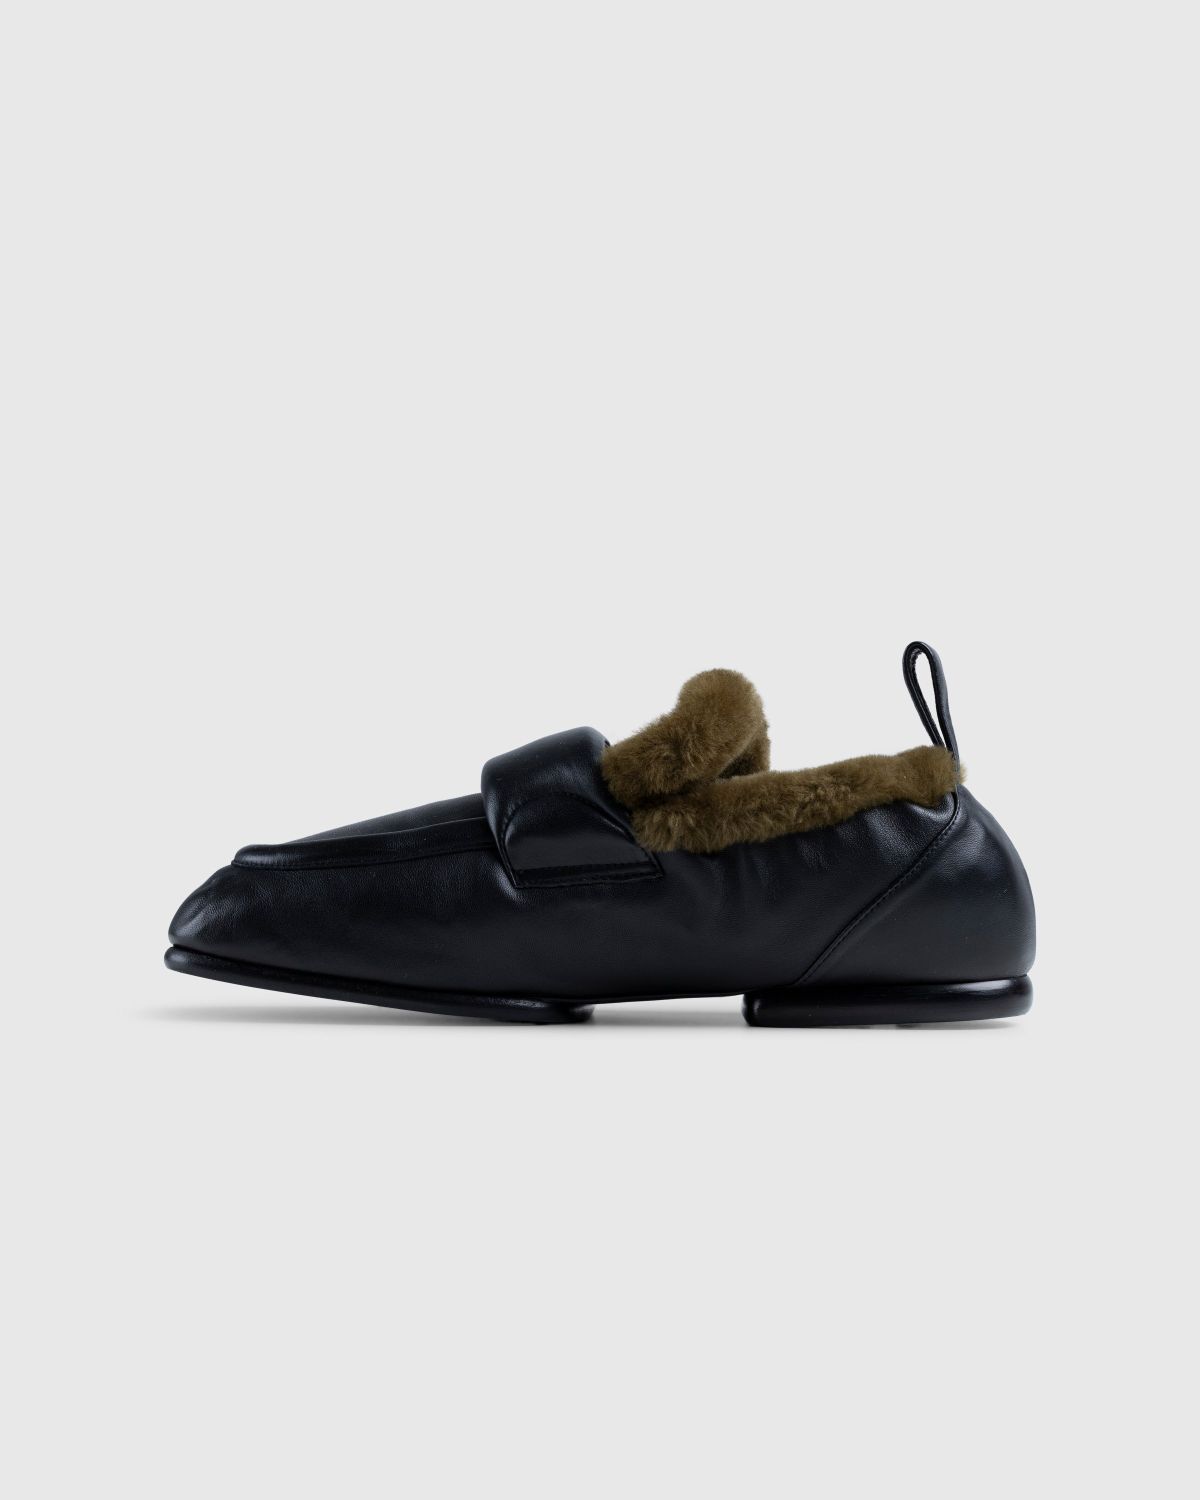 Dries van Noten – Padded Faux Fur Loafers Black - Sandals - Black - Image 2